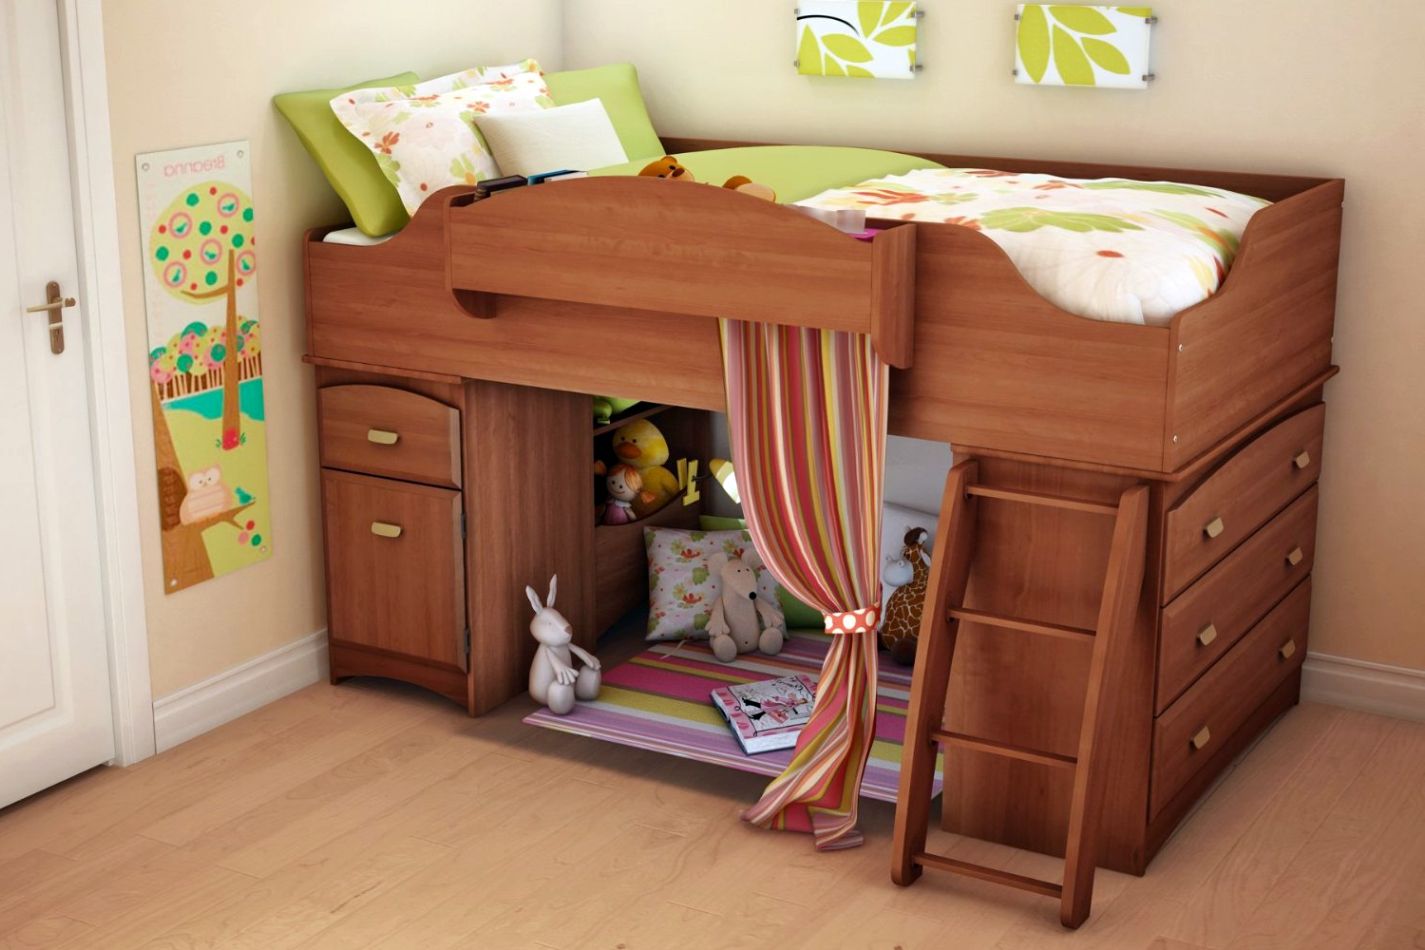 14 Adorable Modern Loft Beds Design Ideas for Your Kids
